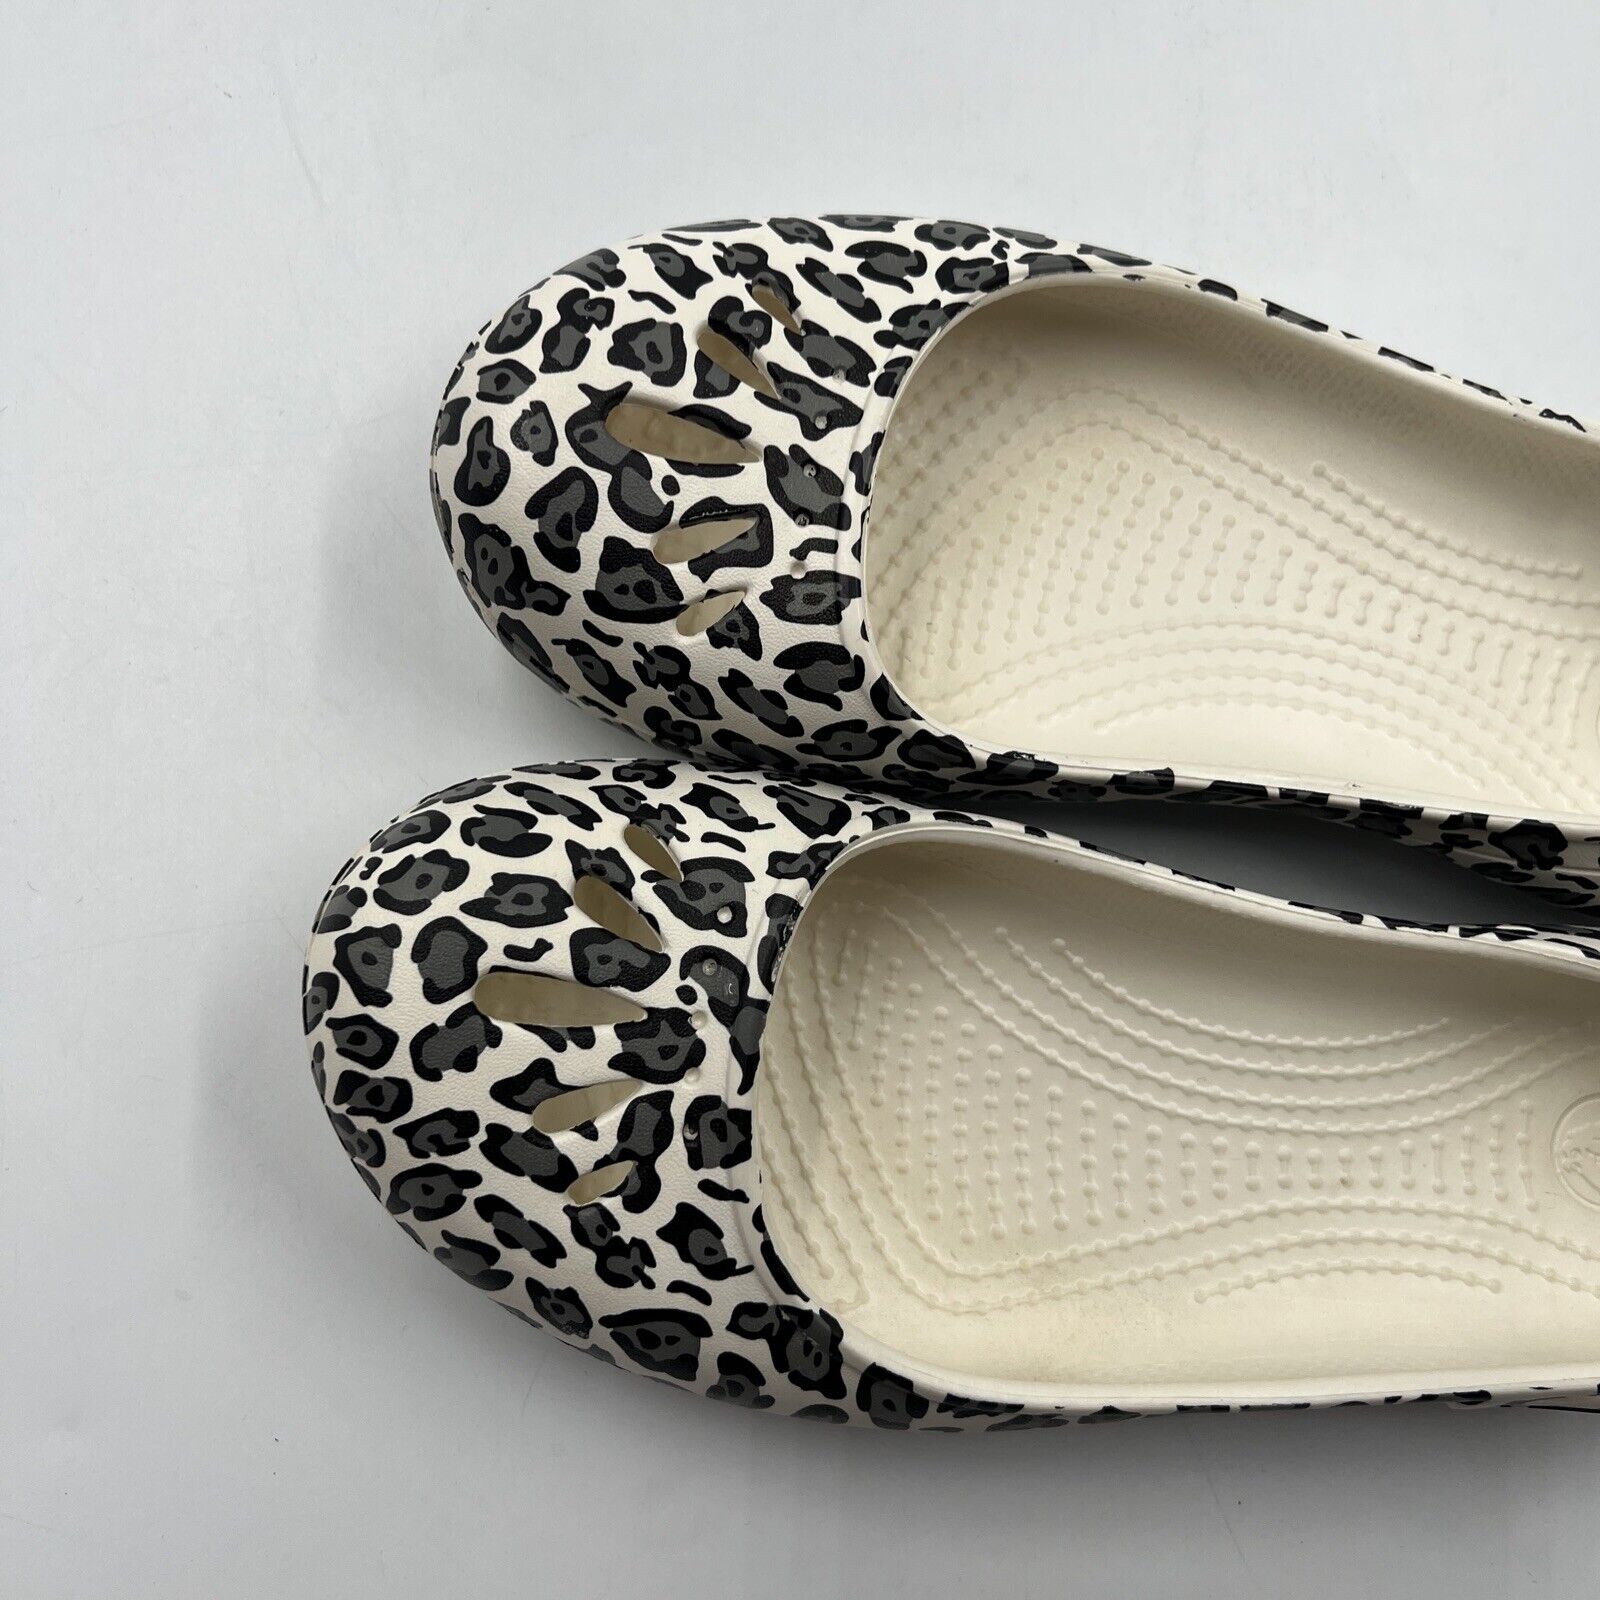 CROCS Kadee Ballet Flats Animal Print Leopard Cheetah Mary Janes 